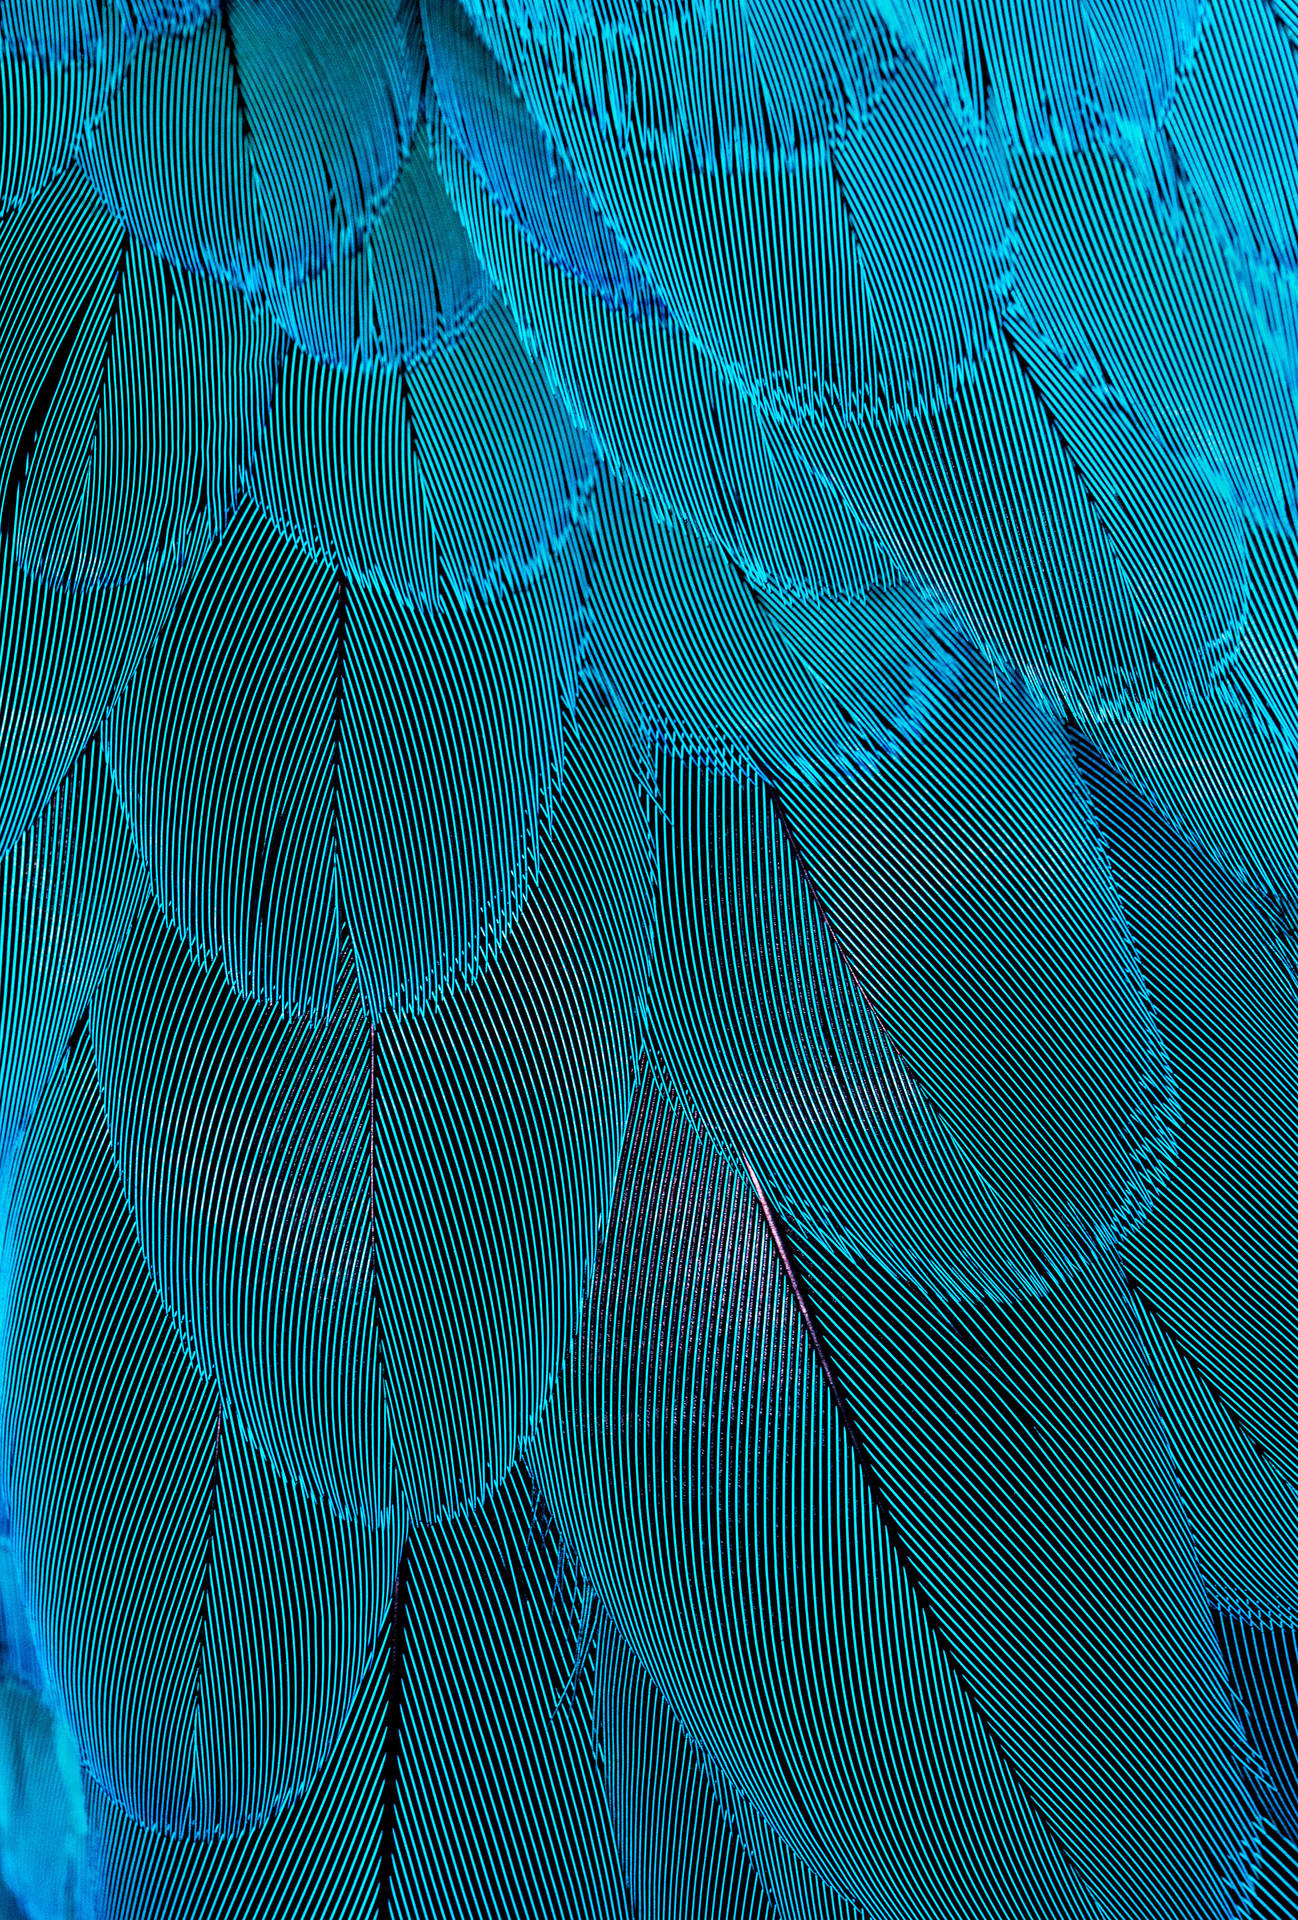 Blue Feather Pattern Wallpaper